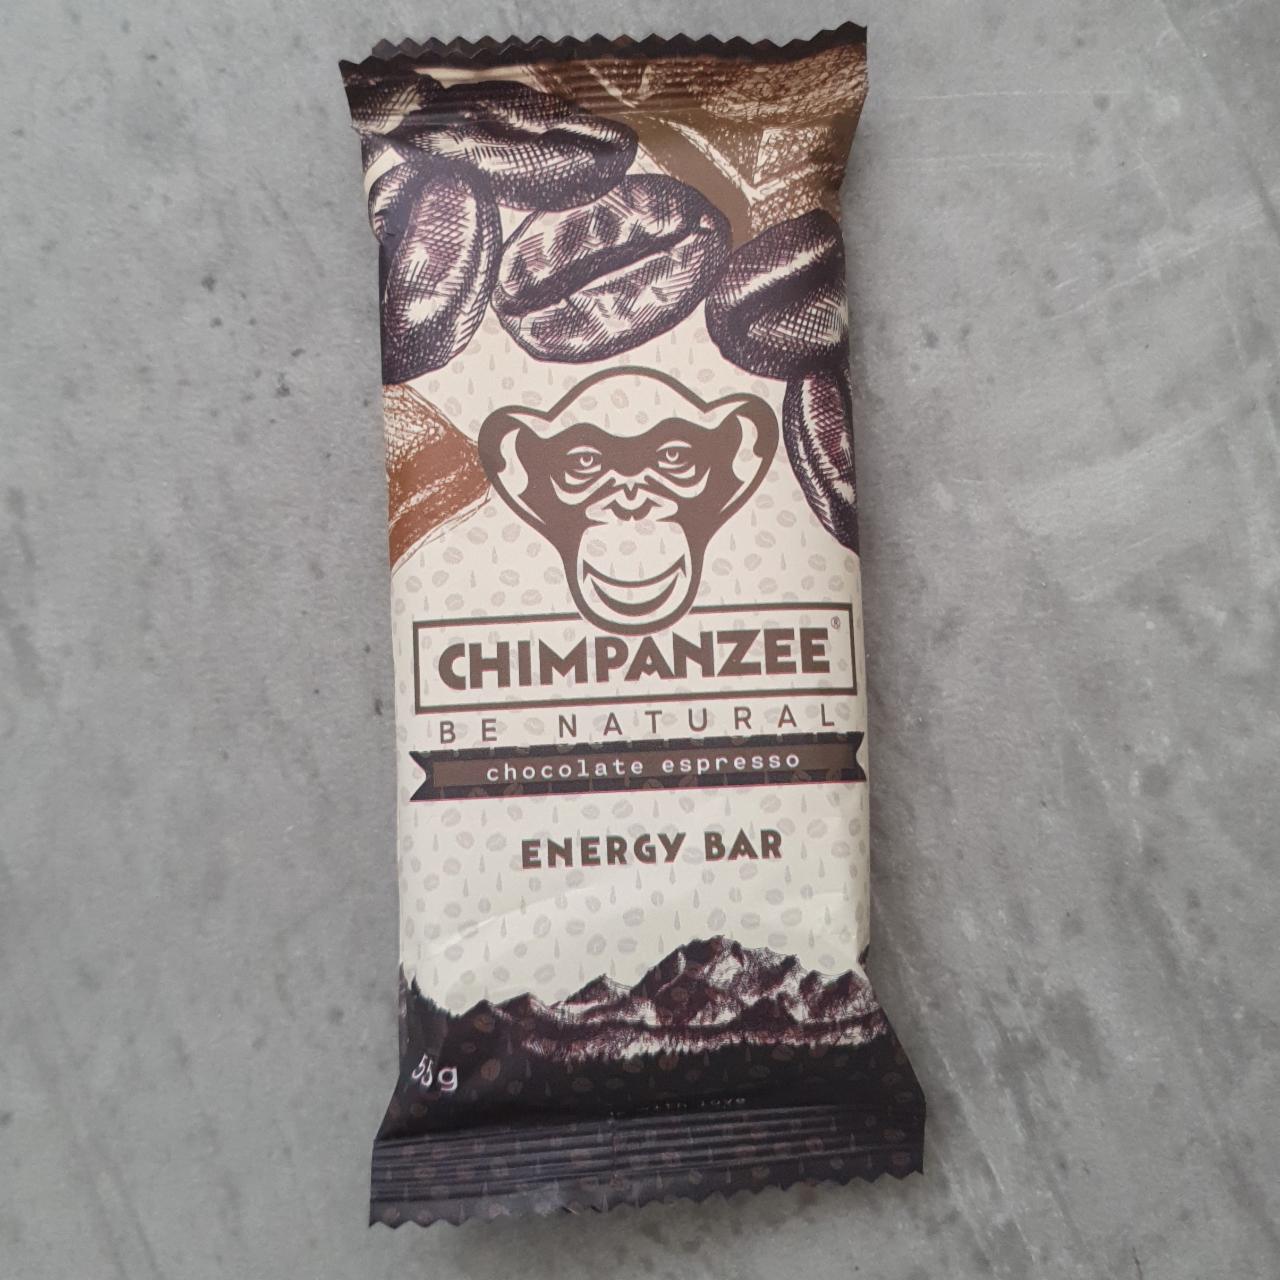 Fotografie - Energy bar Be Natural Chocolate espresso Chimpanzee